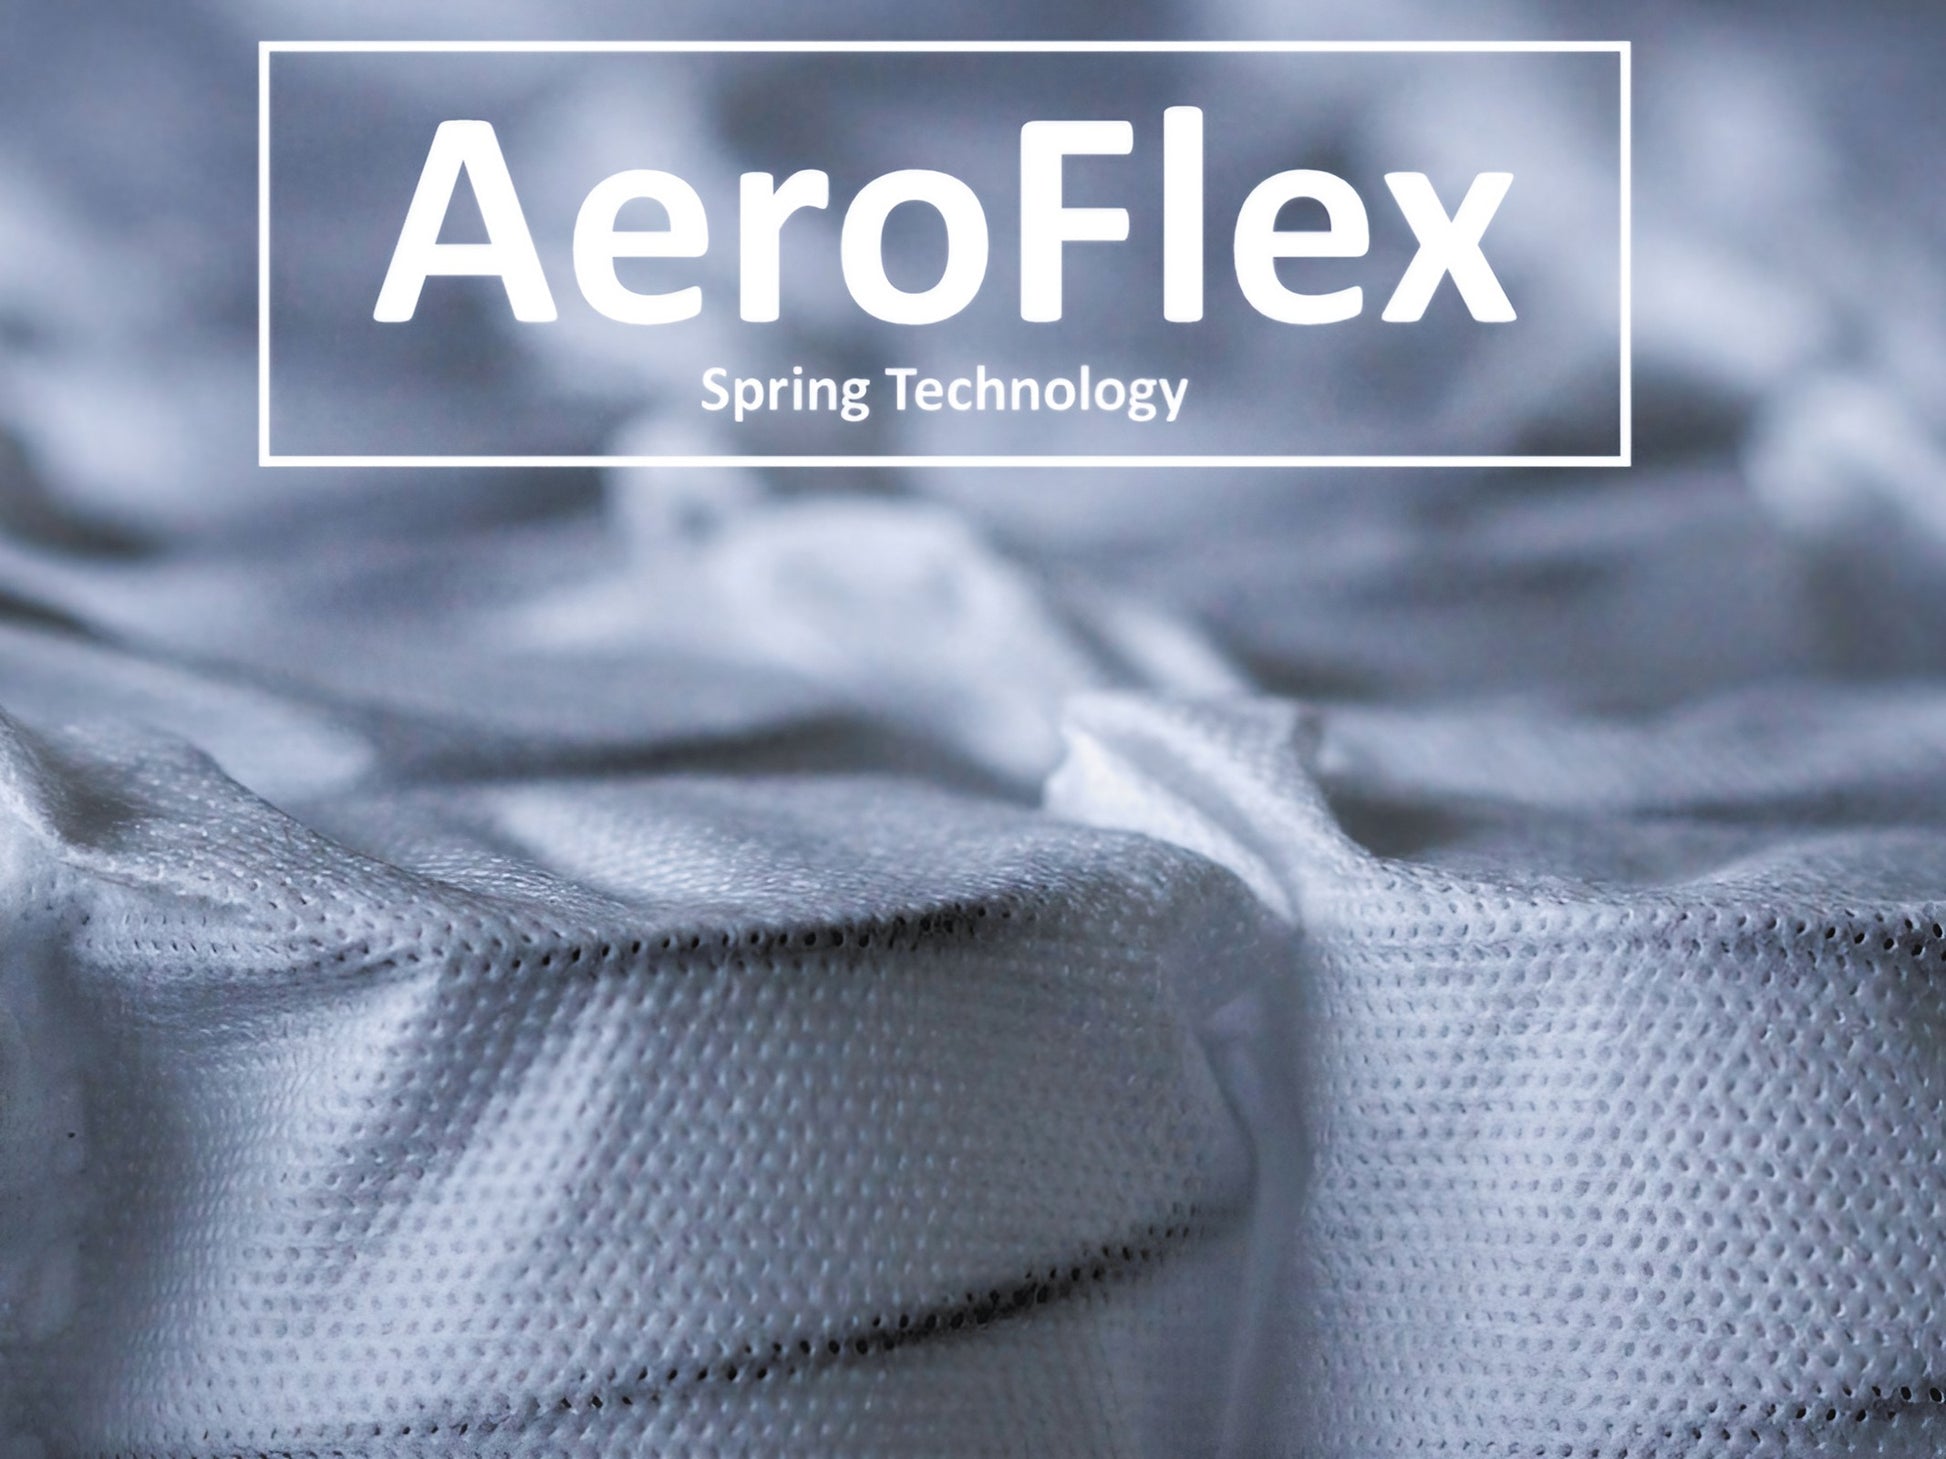 AeroFlex Spring Technology